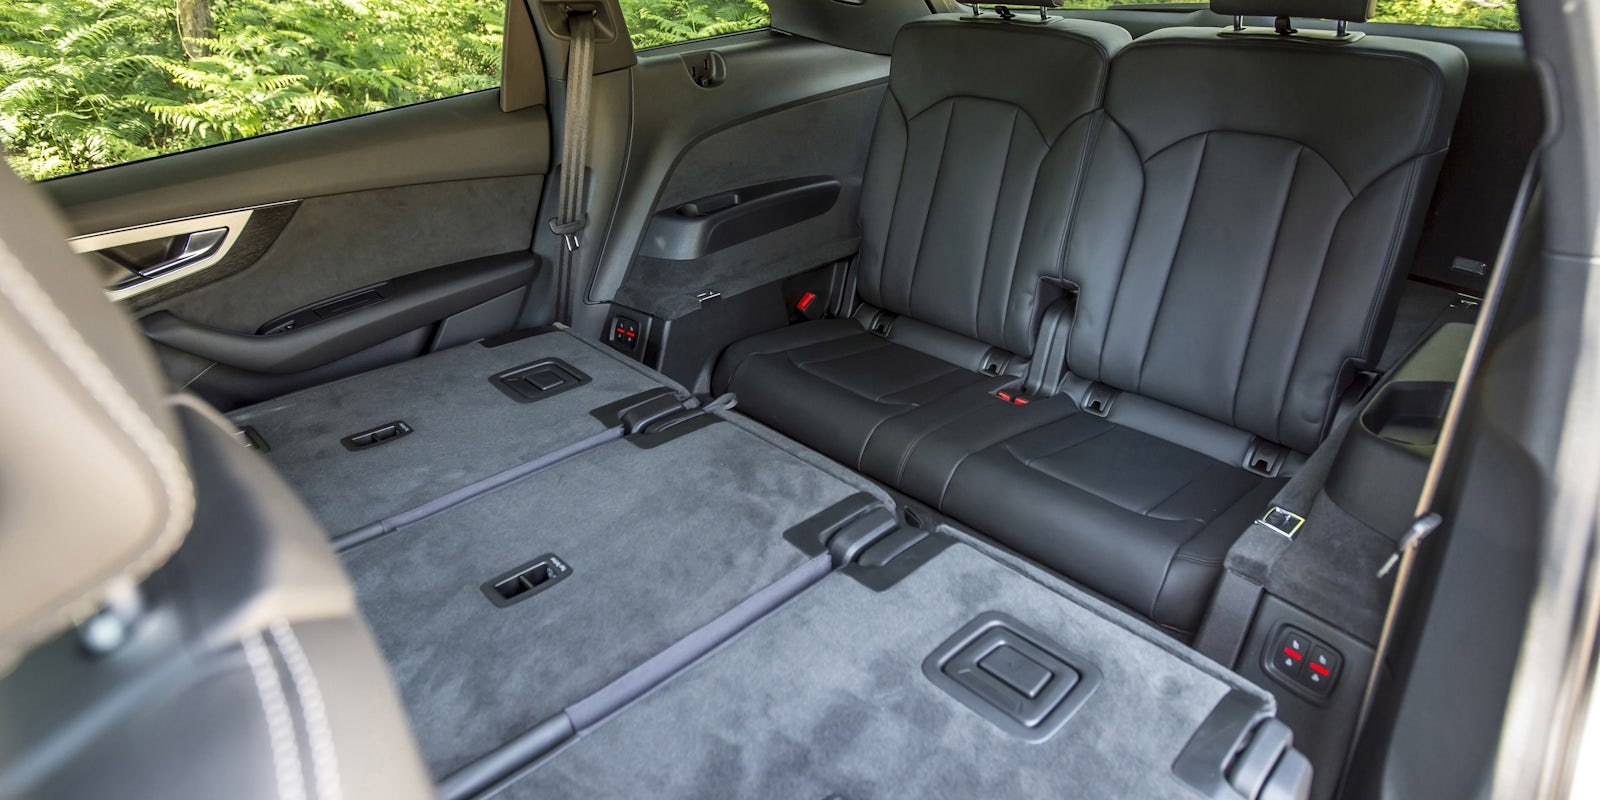 Audi Q7 interior and infotainment | carwow